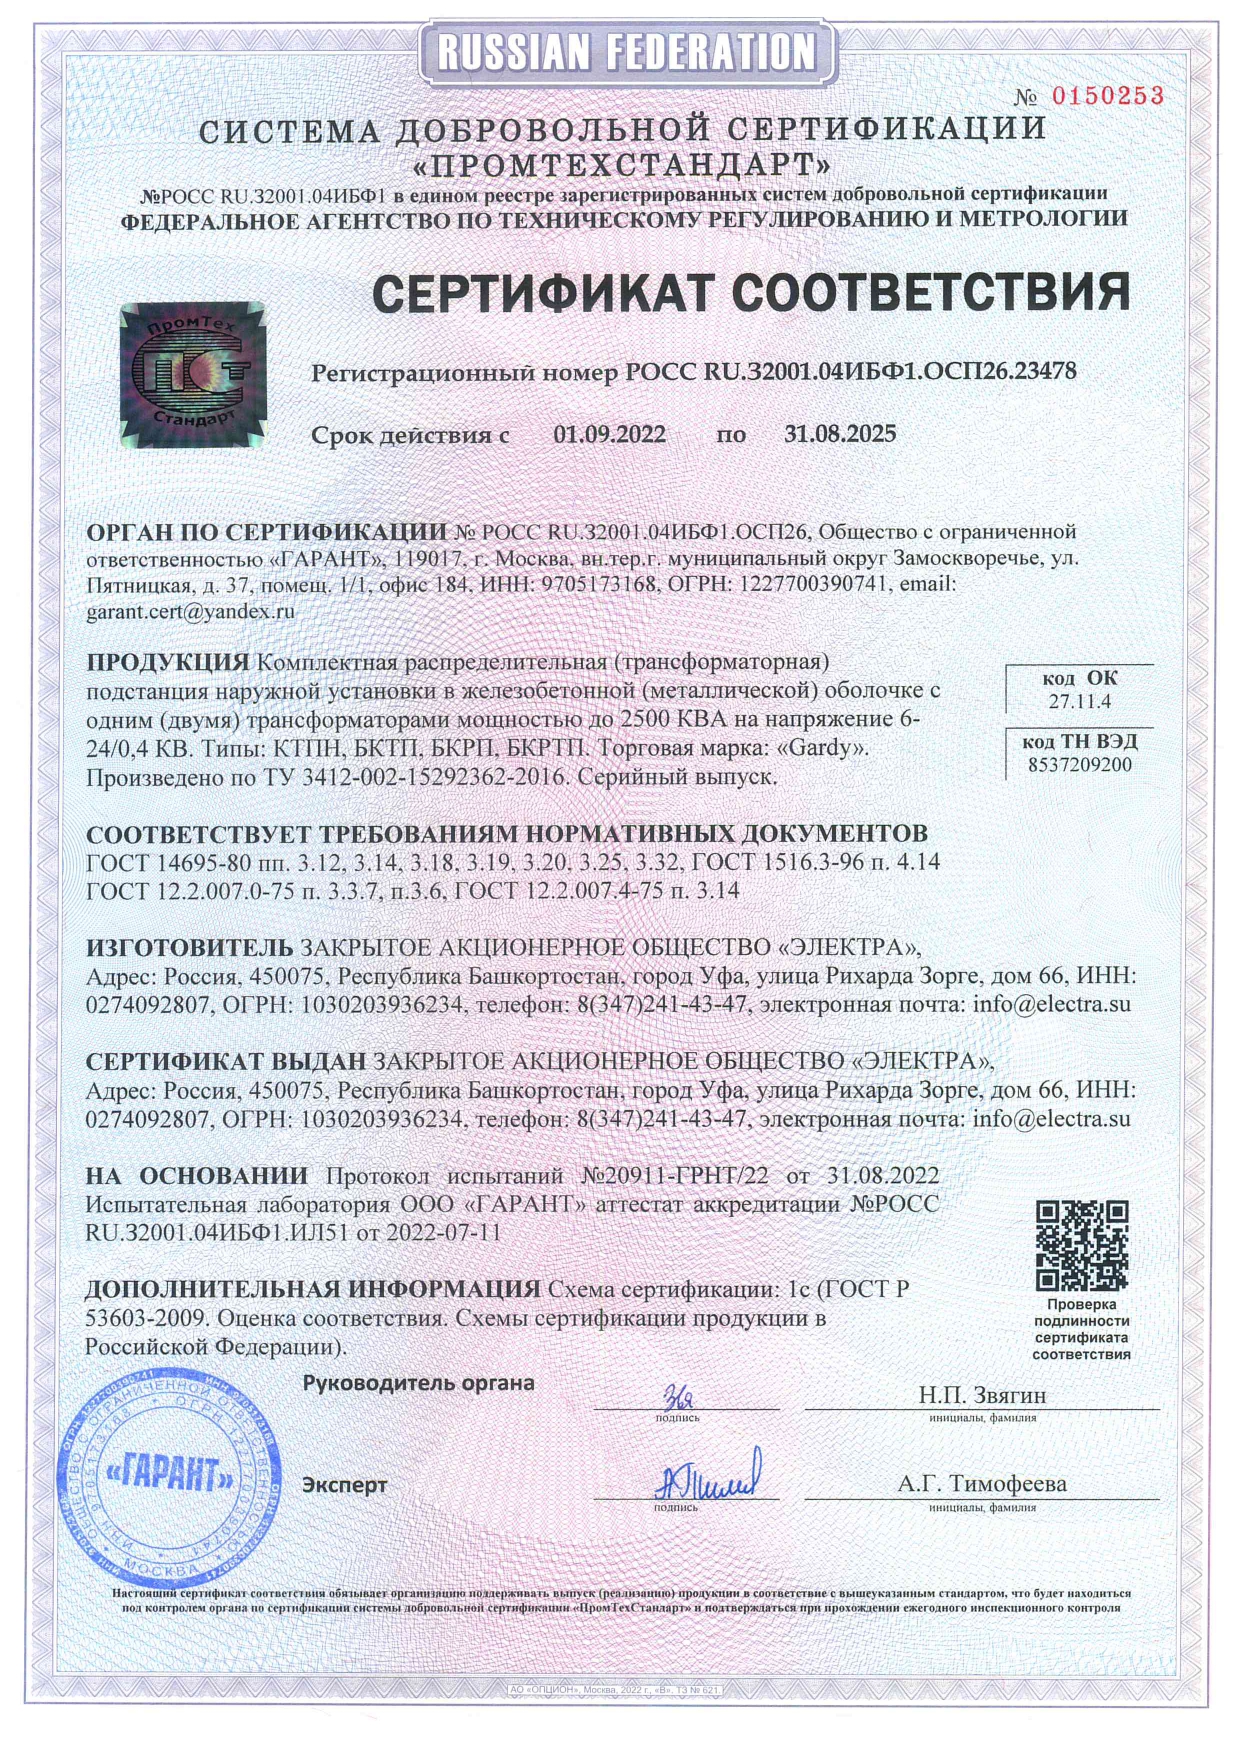 TM certificate